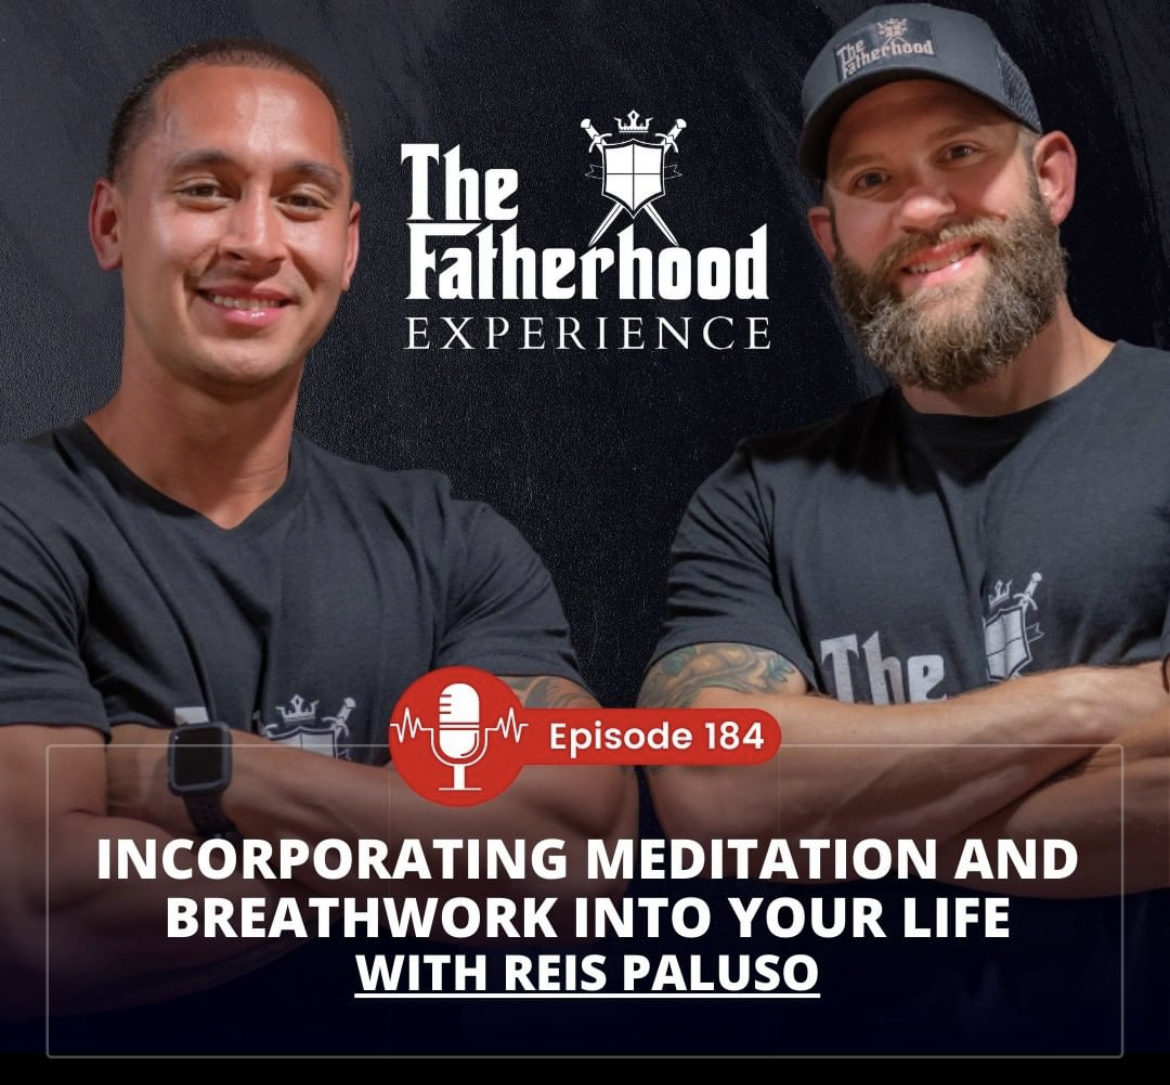 Reis Paluso on The Fatherhood Experience